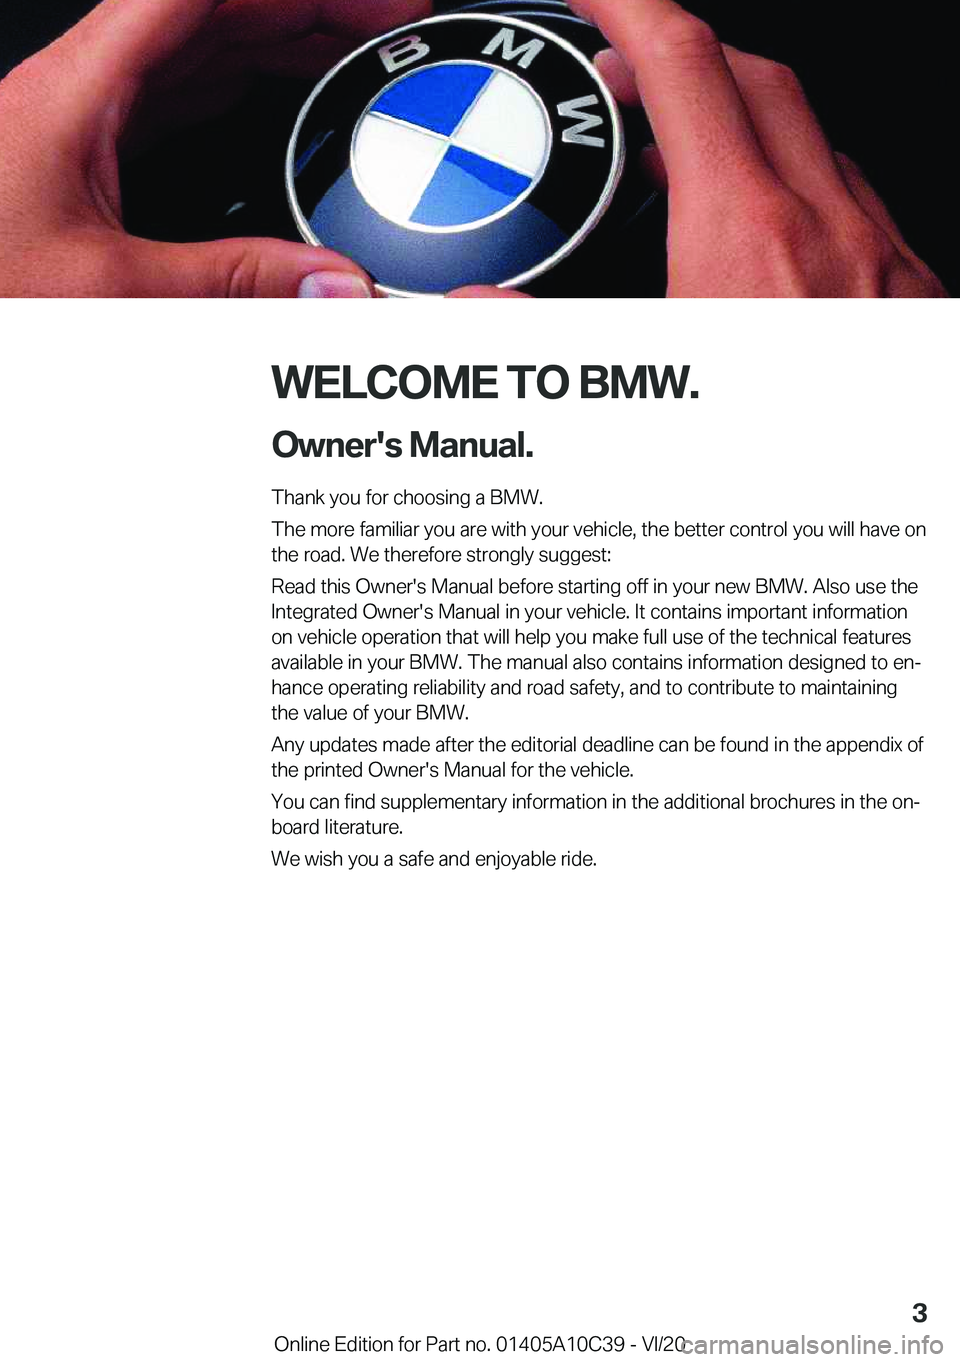 BMW X1 2021  Owners Manual �W�E�L�C�O�M�E��T�O��B�M�W�.�O�w�n�e�r�'�s��M�a�n�u�a�l�.
�T�h�a�n�k��y�o�u��f�o�r��c�h�o�o�s�i�n�g��a��B�M�W�.
�T�h�e��m�o�r�e��f�a�m�i�l�i�a�r��y�o�u��a�r�e��w�i�t�h��y�o�u�r��v�e